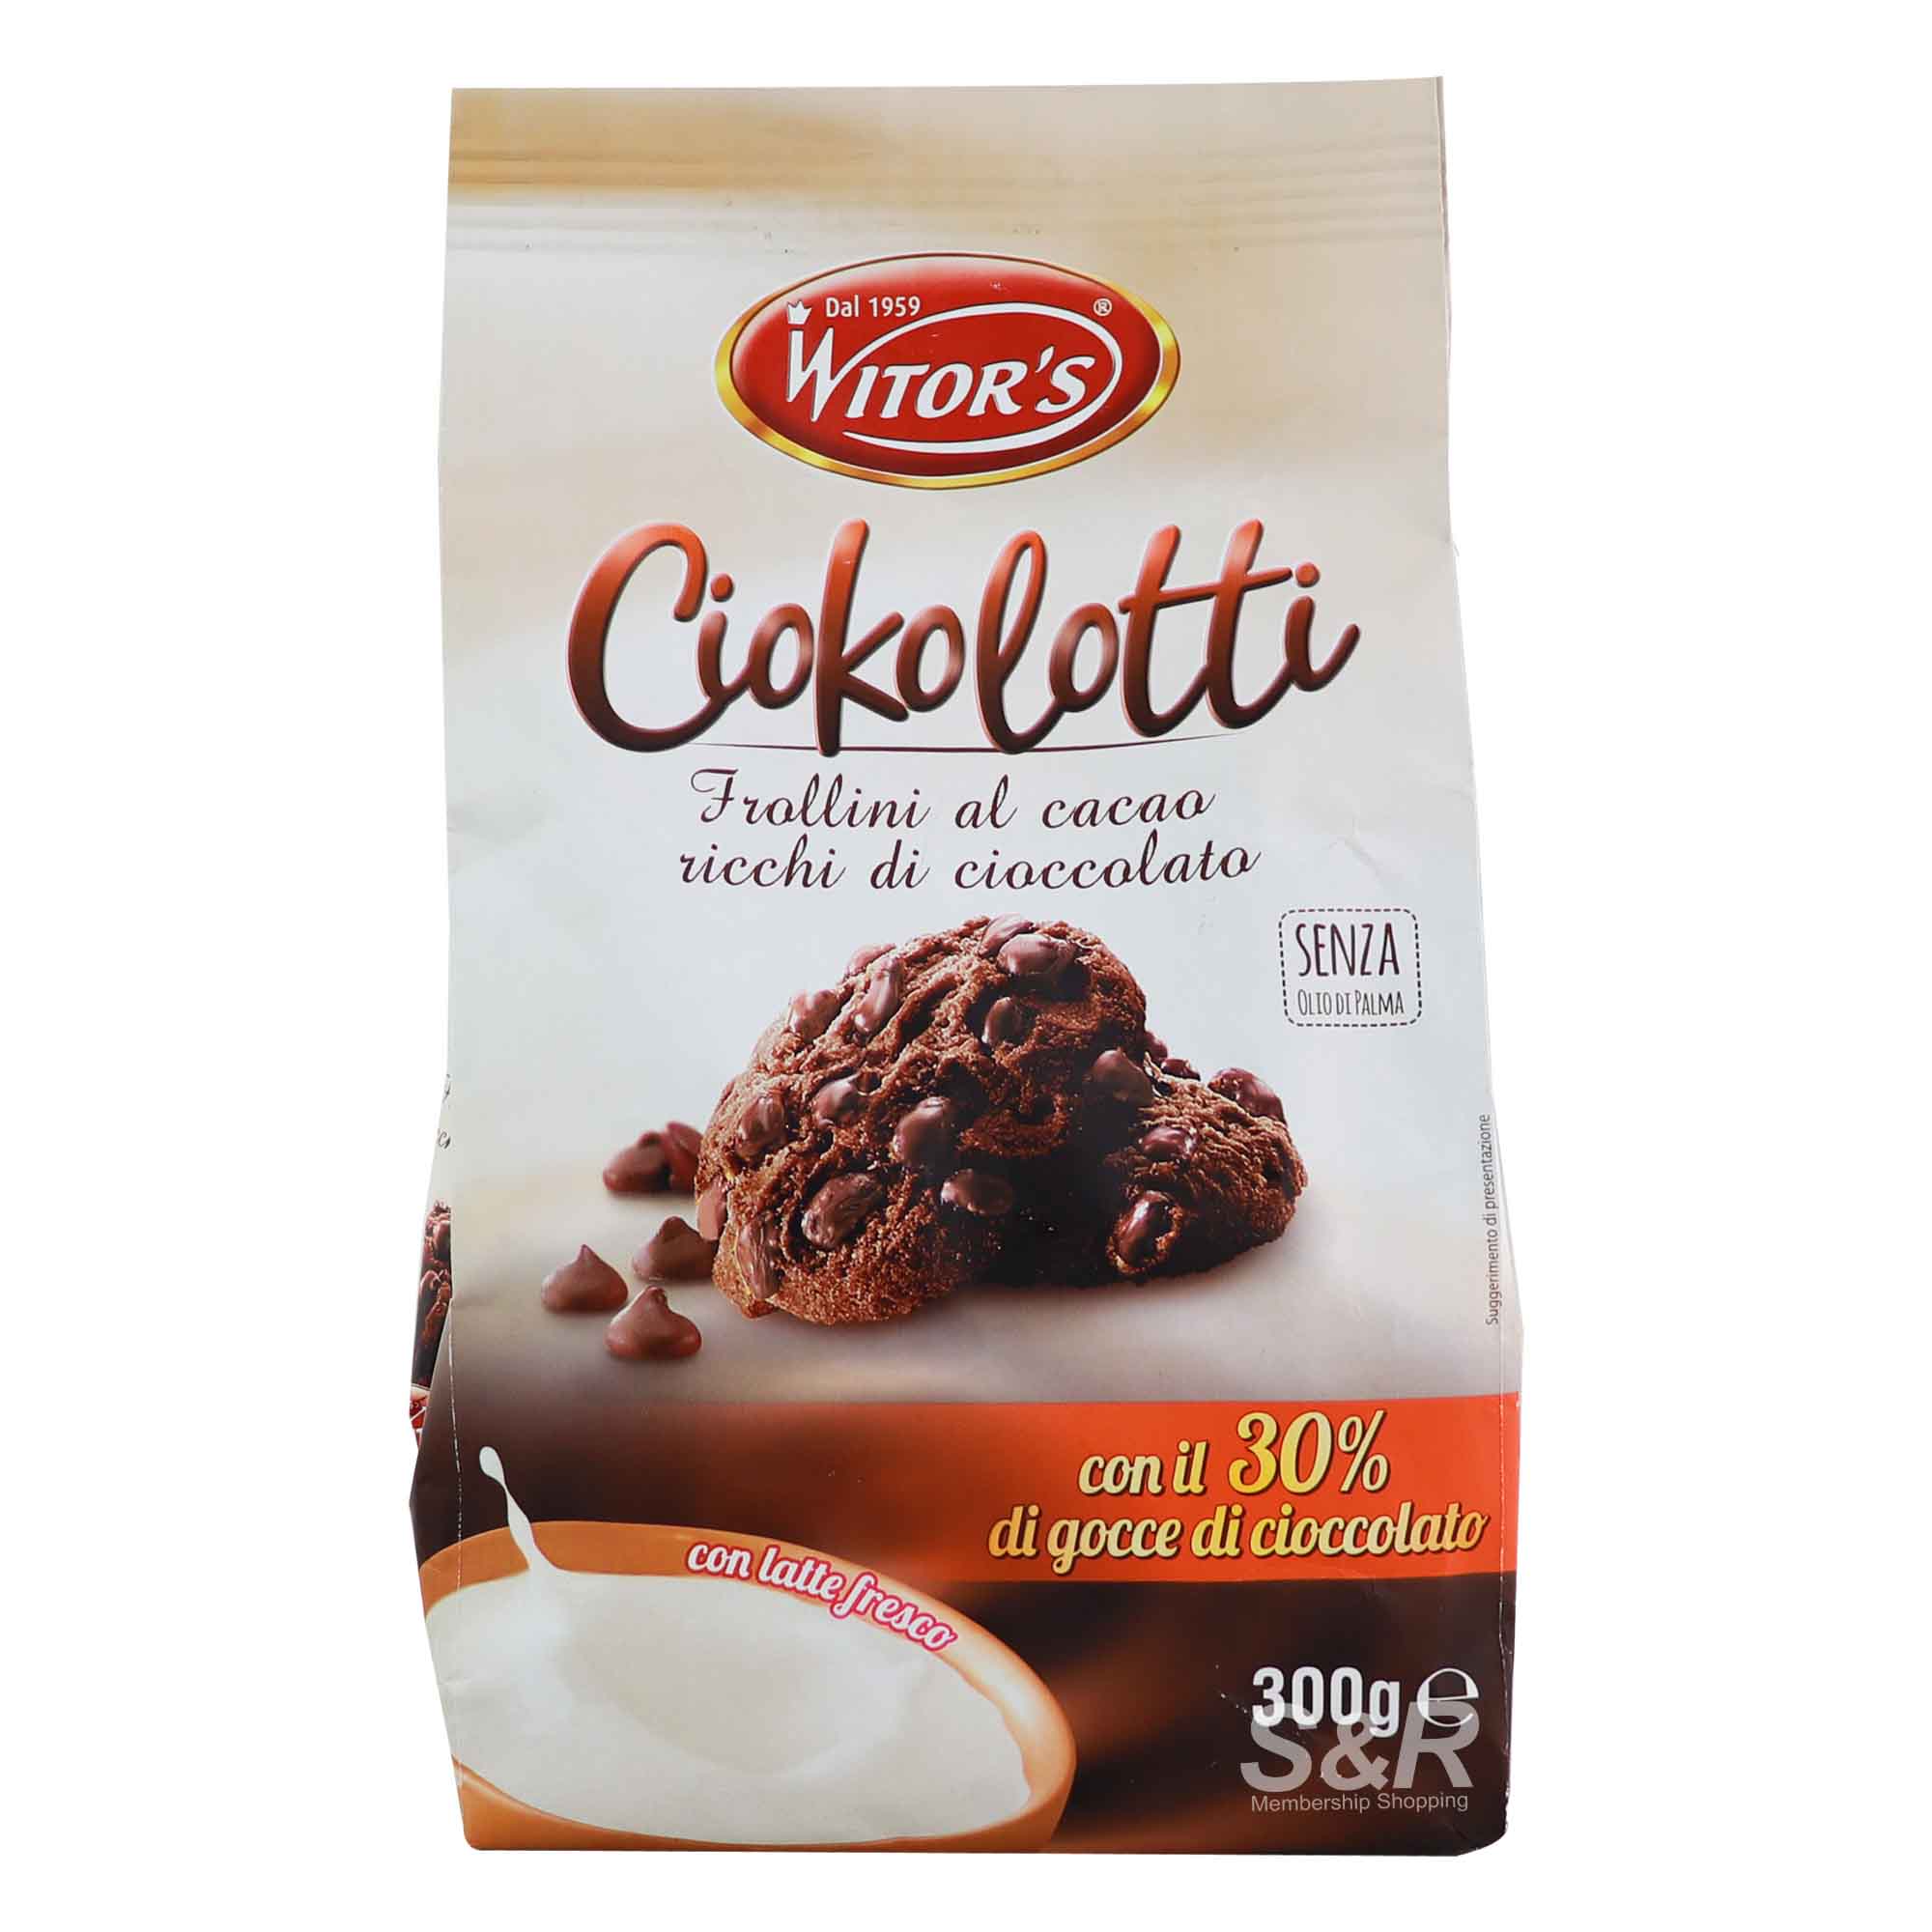 Witor's Ciokolotti Cookies 300g